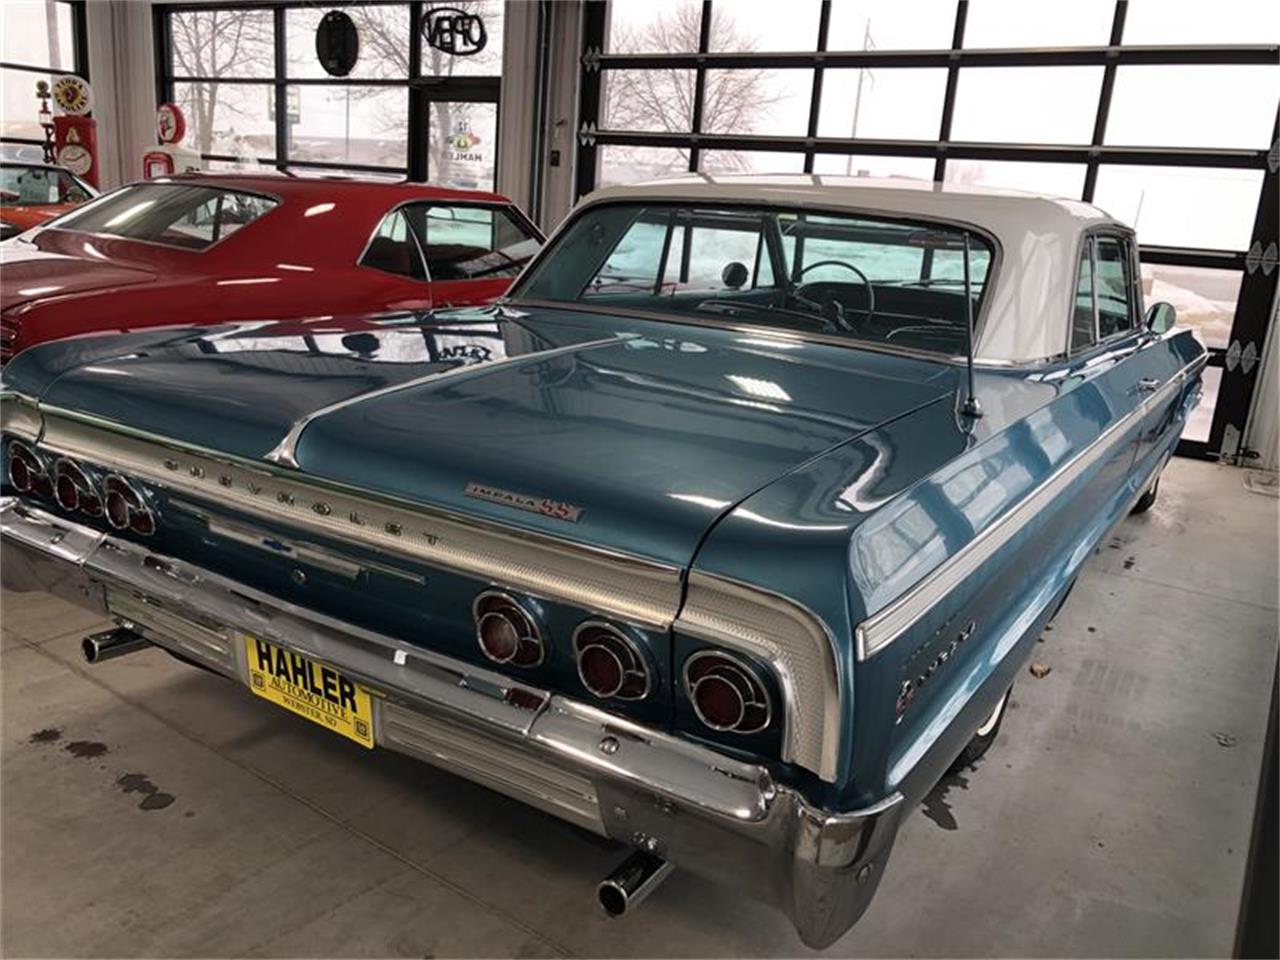 1964 Chevrolet Impala - Pit Bull Four-Pump Set Up 